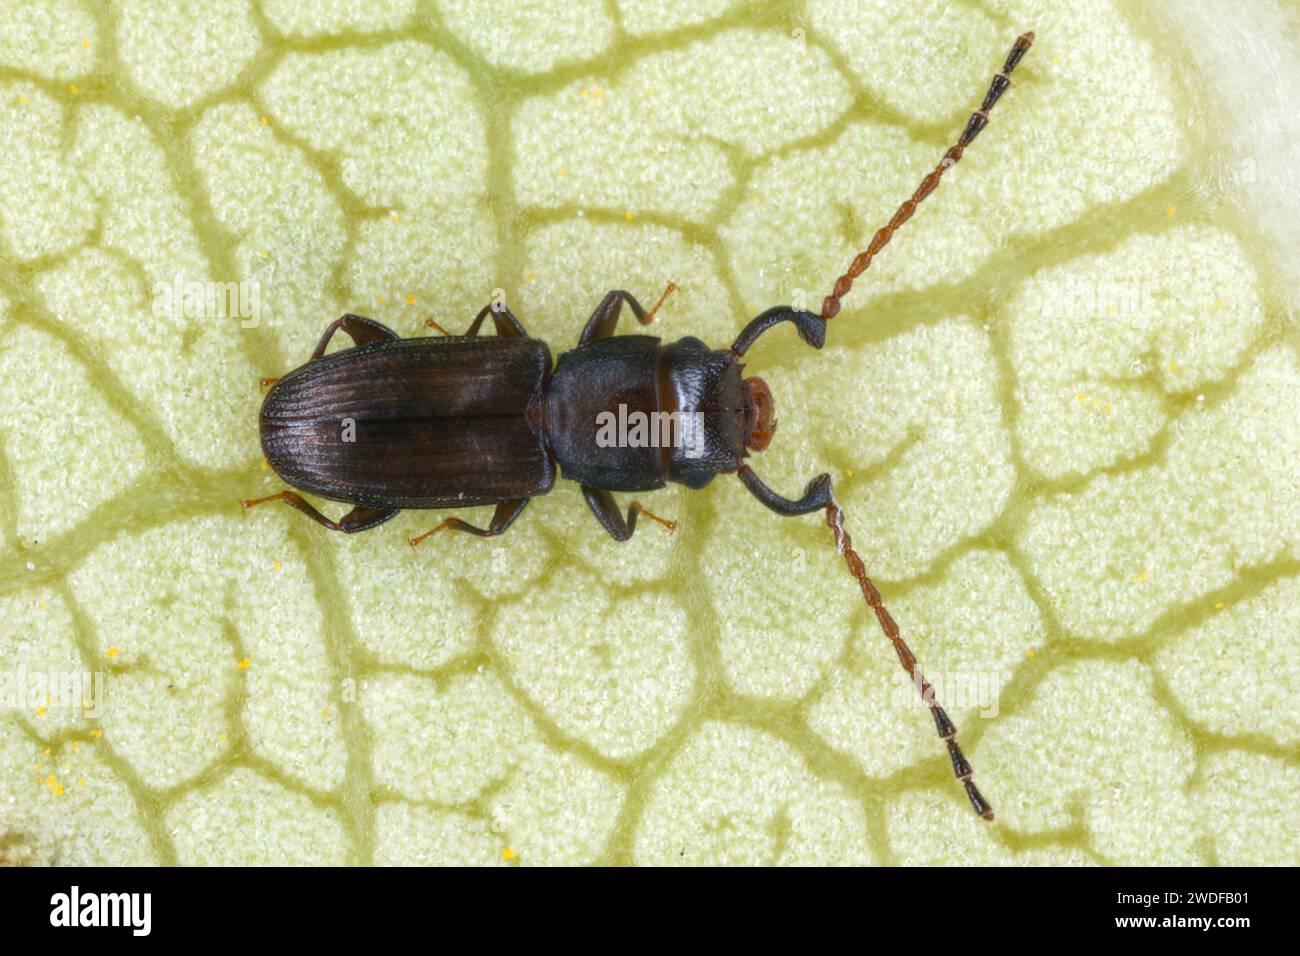 Beetle from family Laemophloeidae, genus Cryptolestes found on Mauritius under the bark. Stock Photo